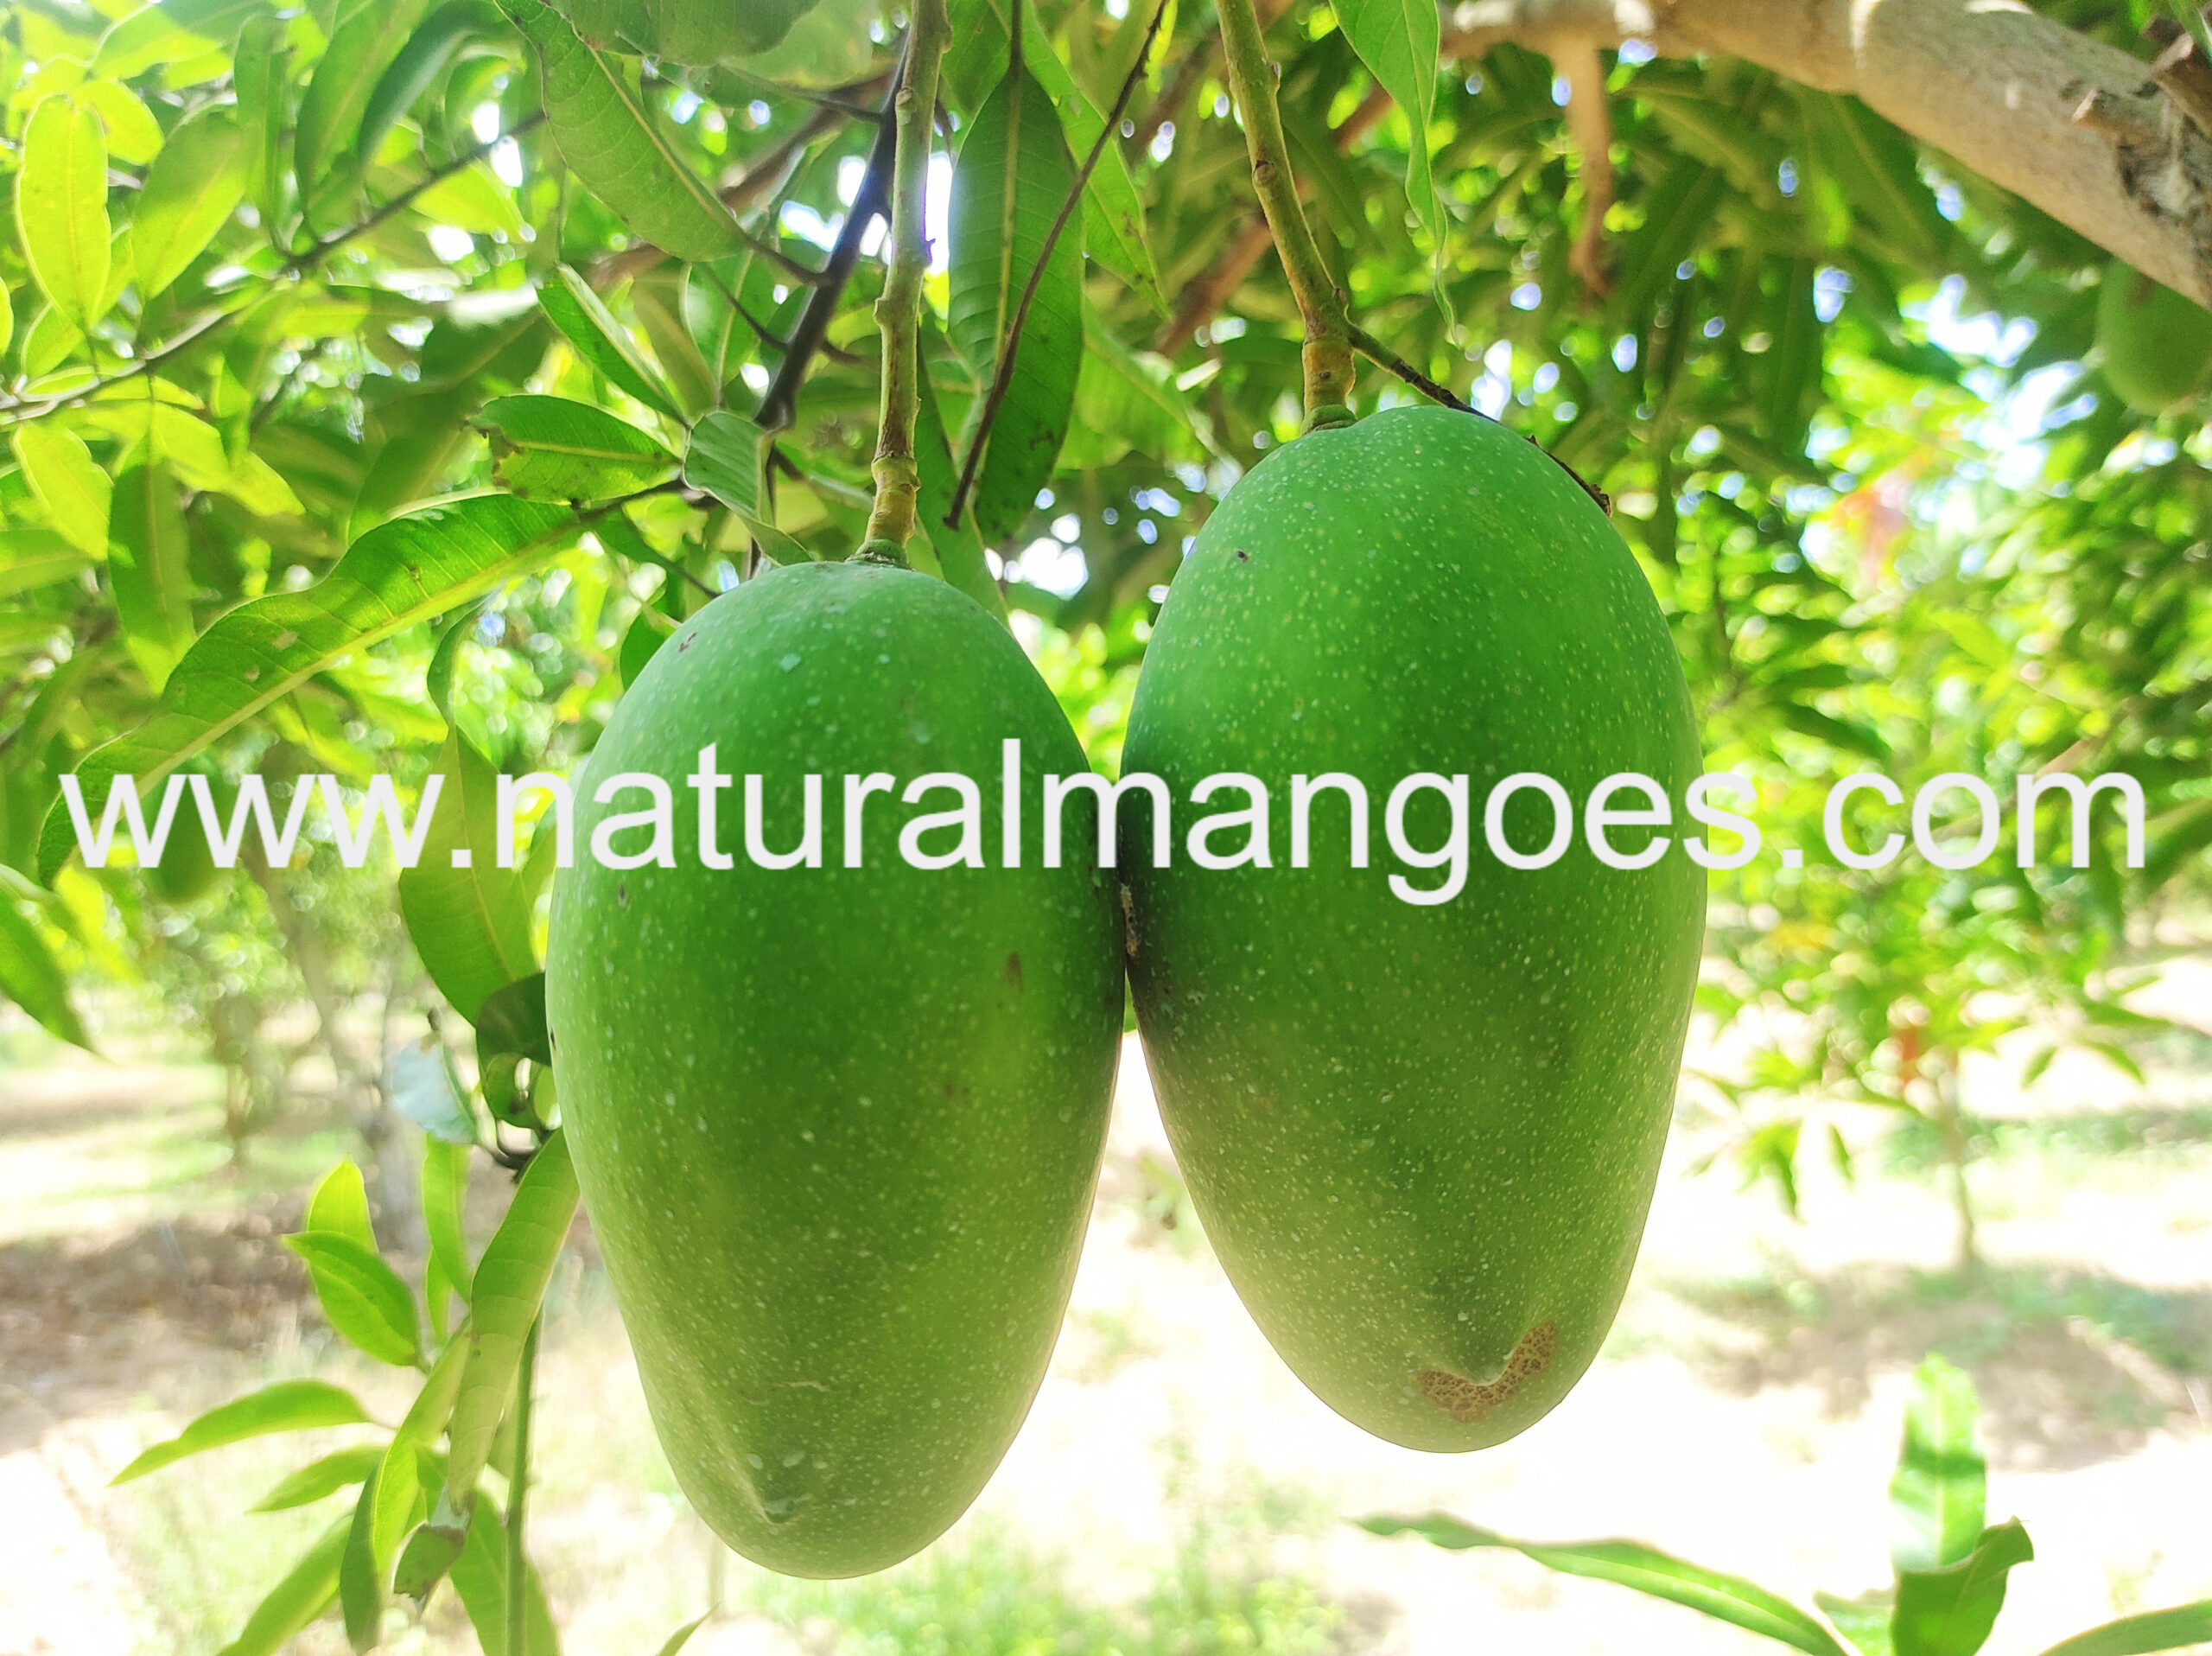 Imampasand Mangoes – The king of mangoes